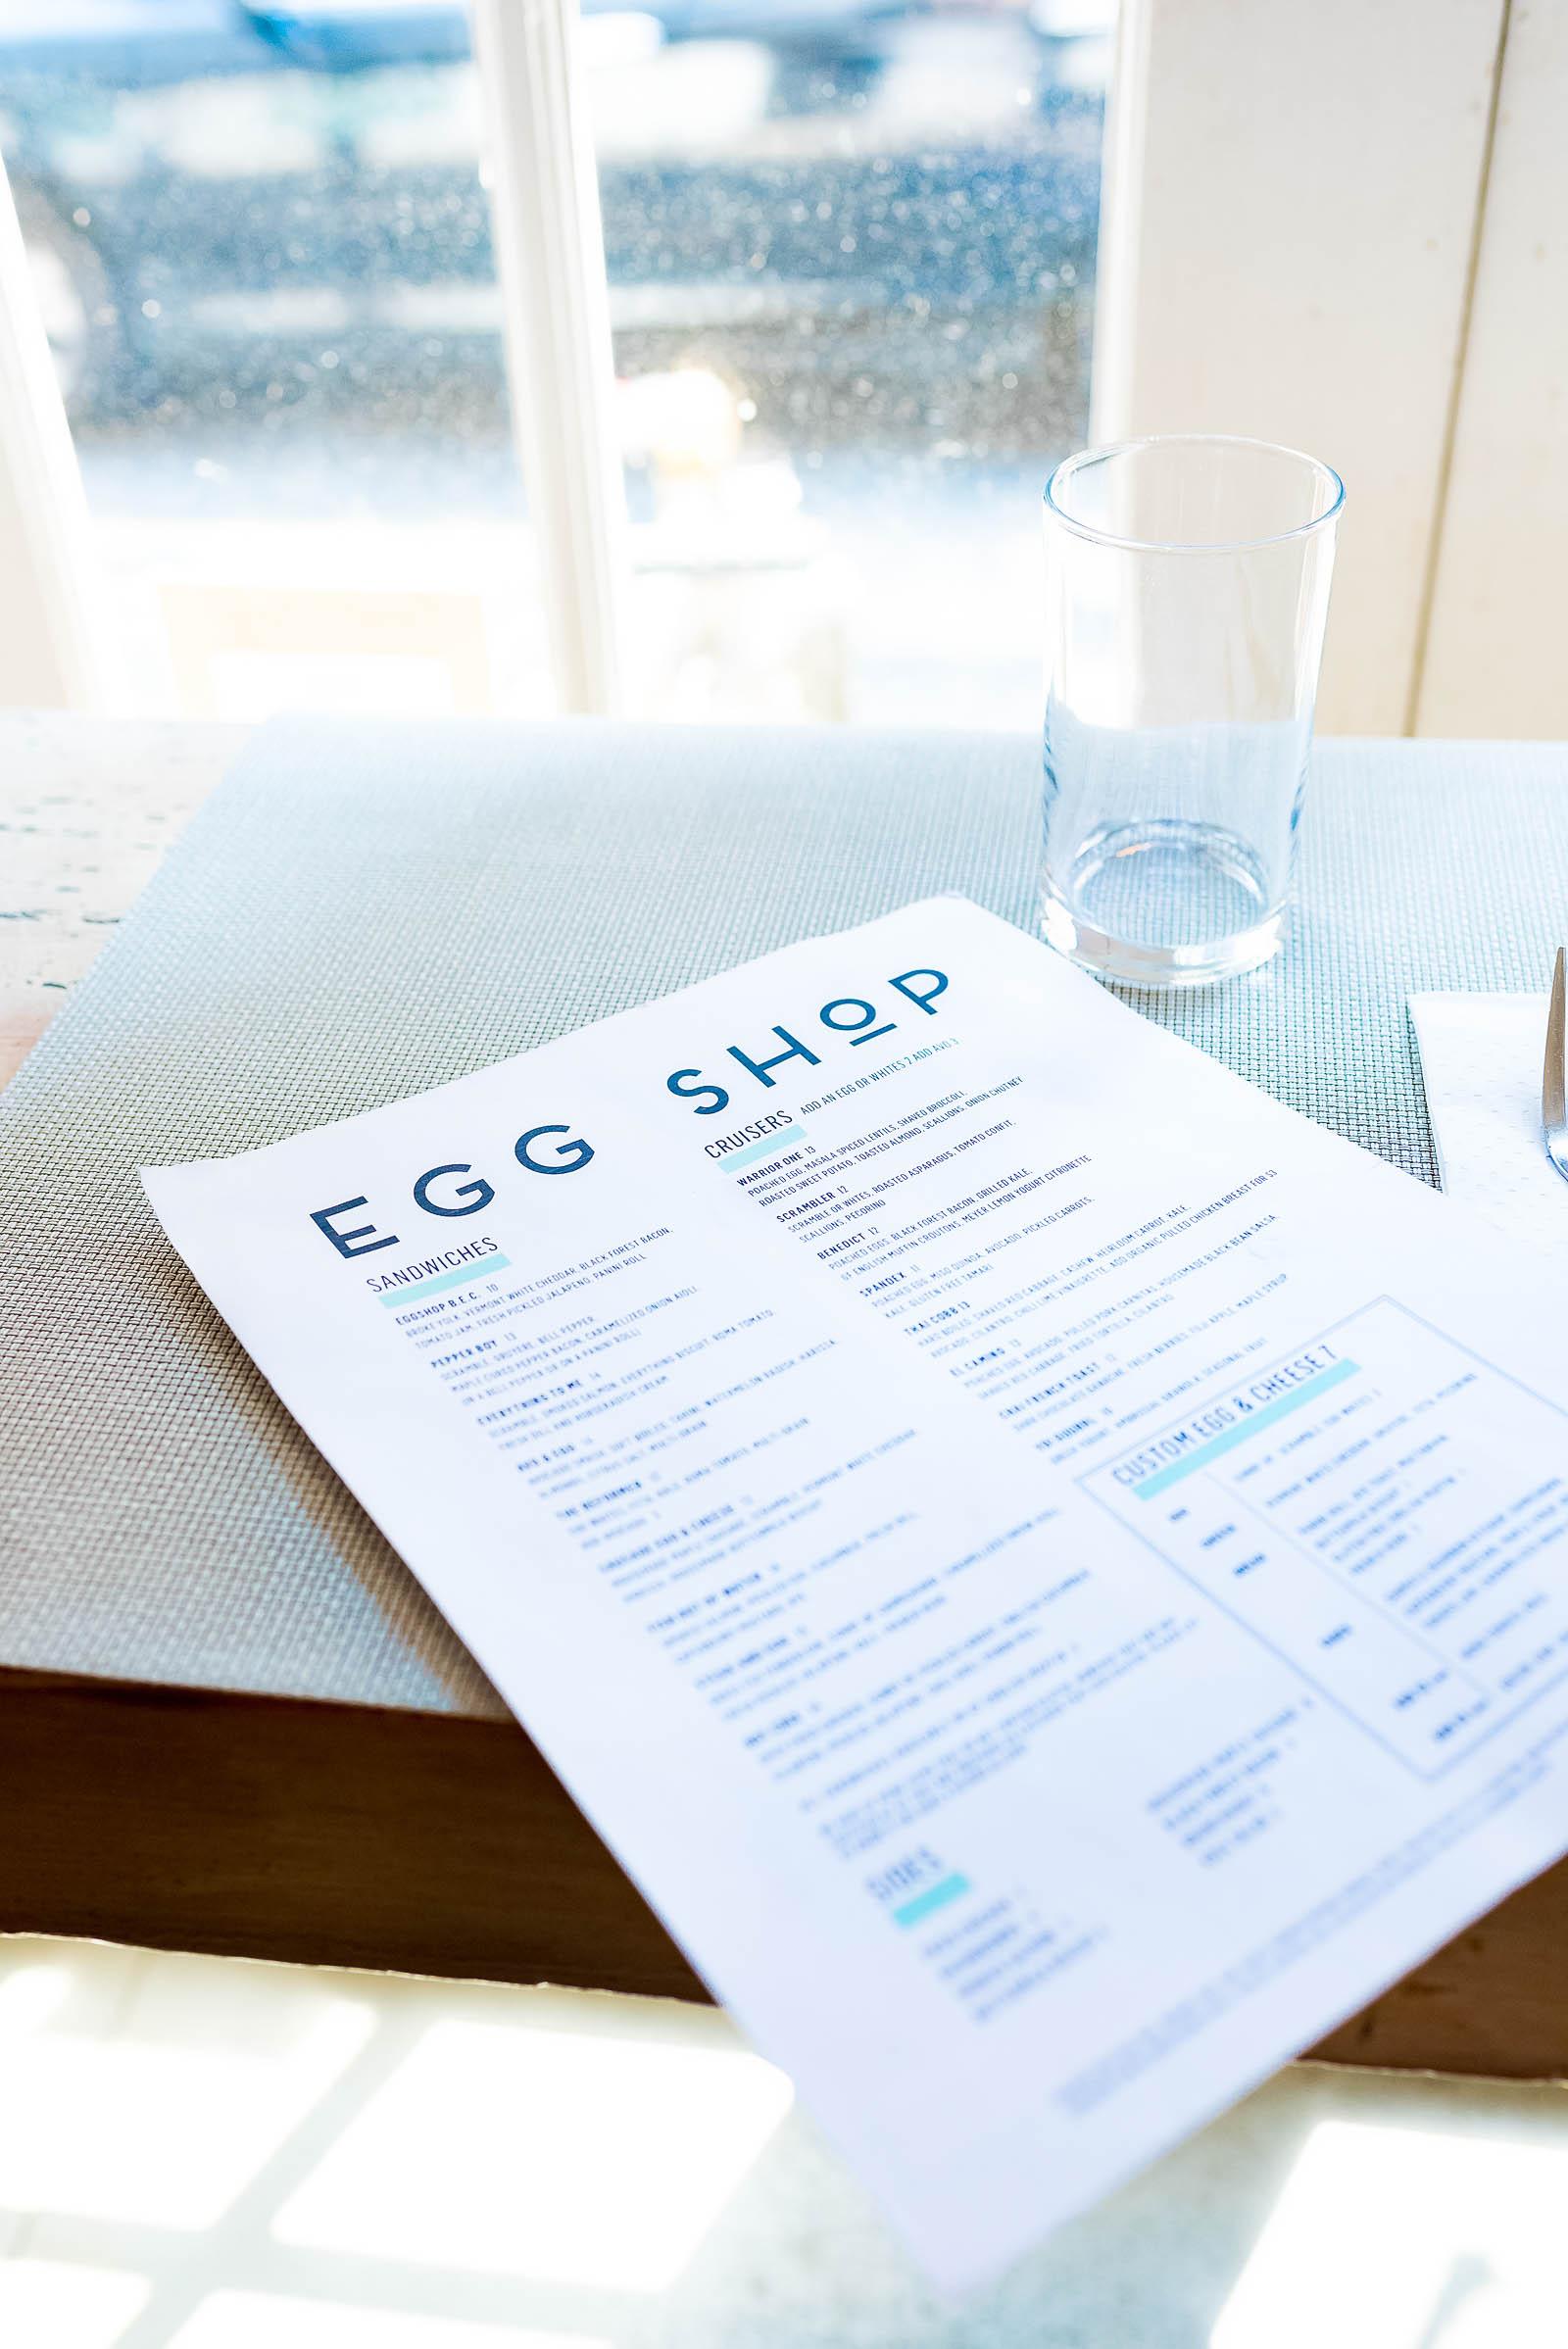 Egg Shop NYC Restaurant